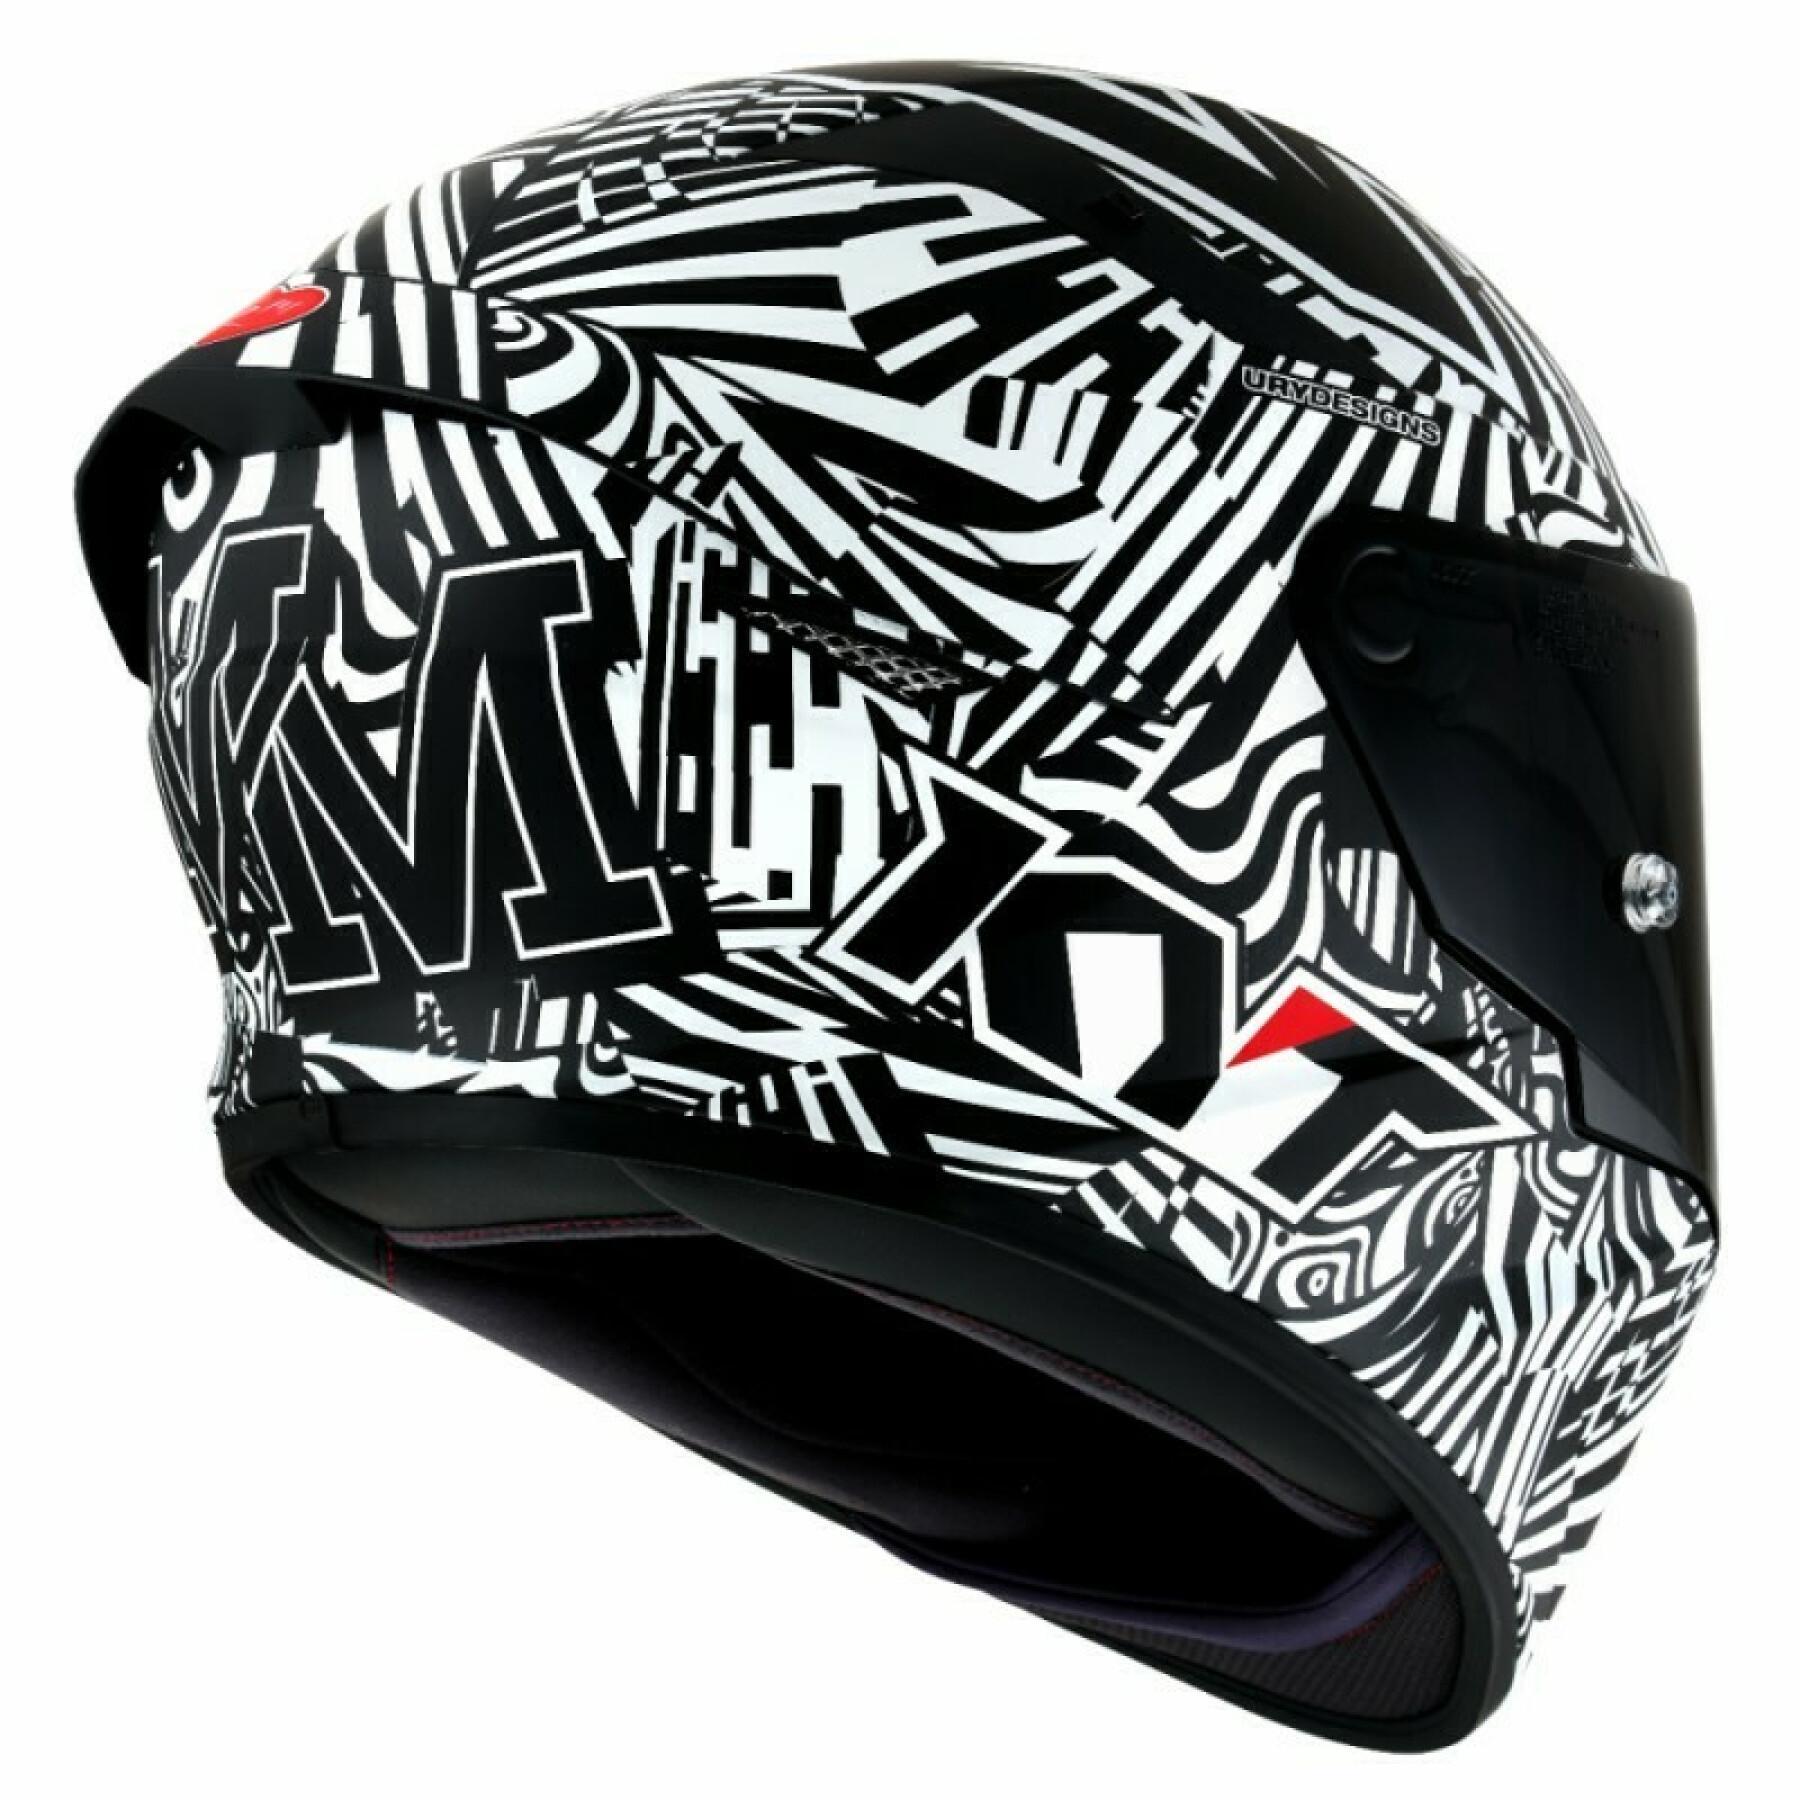 Track helmet Kyt tt-course espargaro' winter test 2020 replica